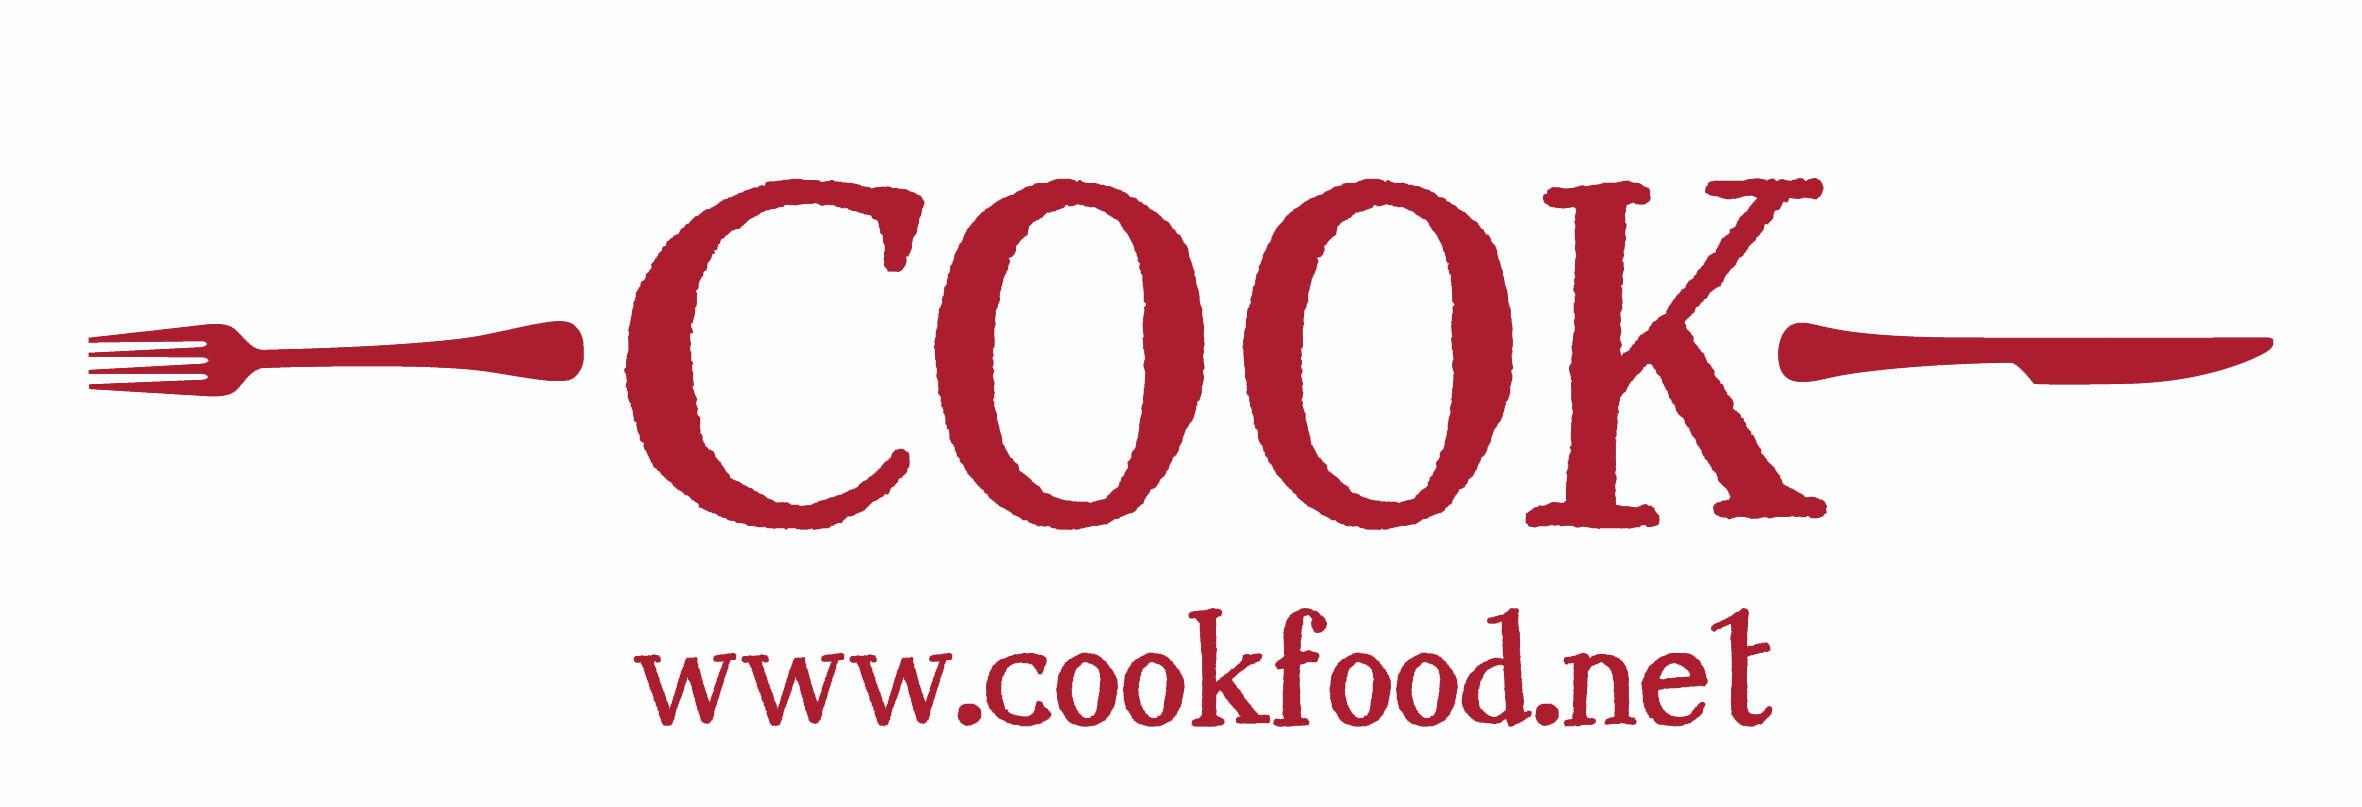 Google Food Logo - cook-food-logo - FoodCycle